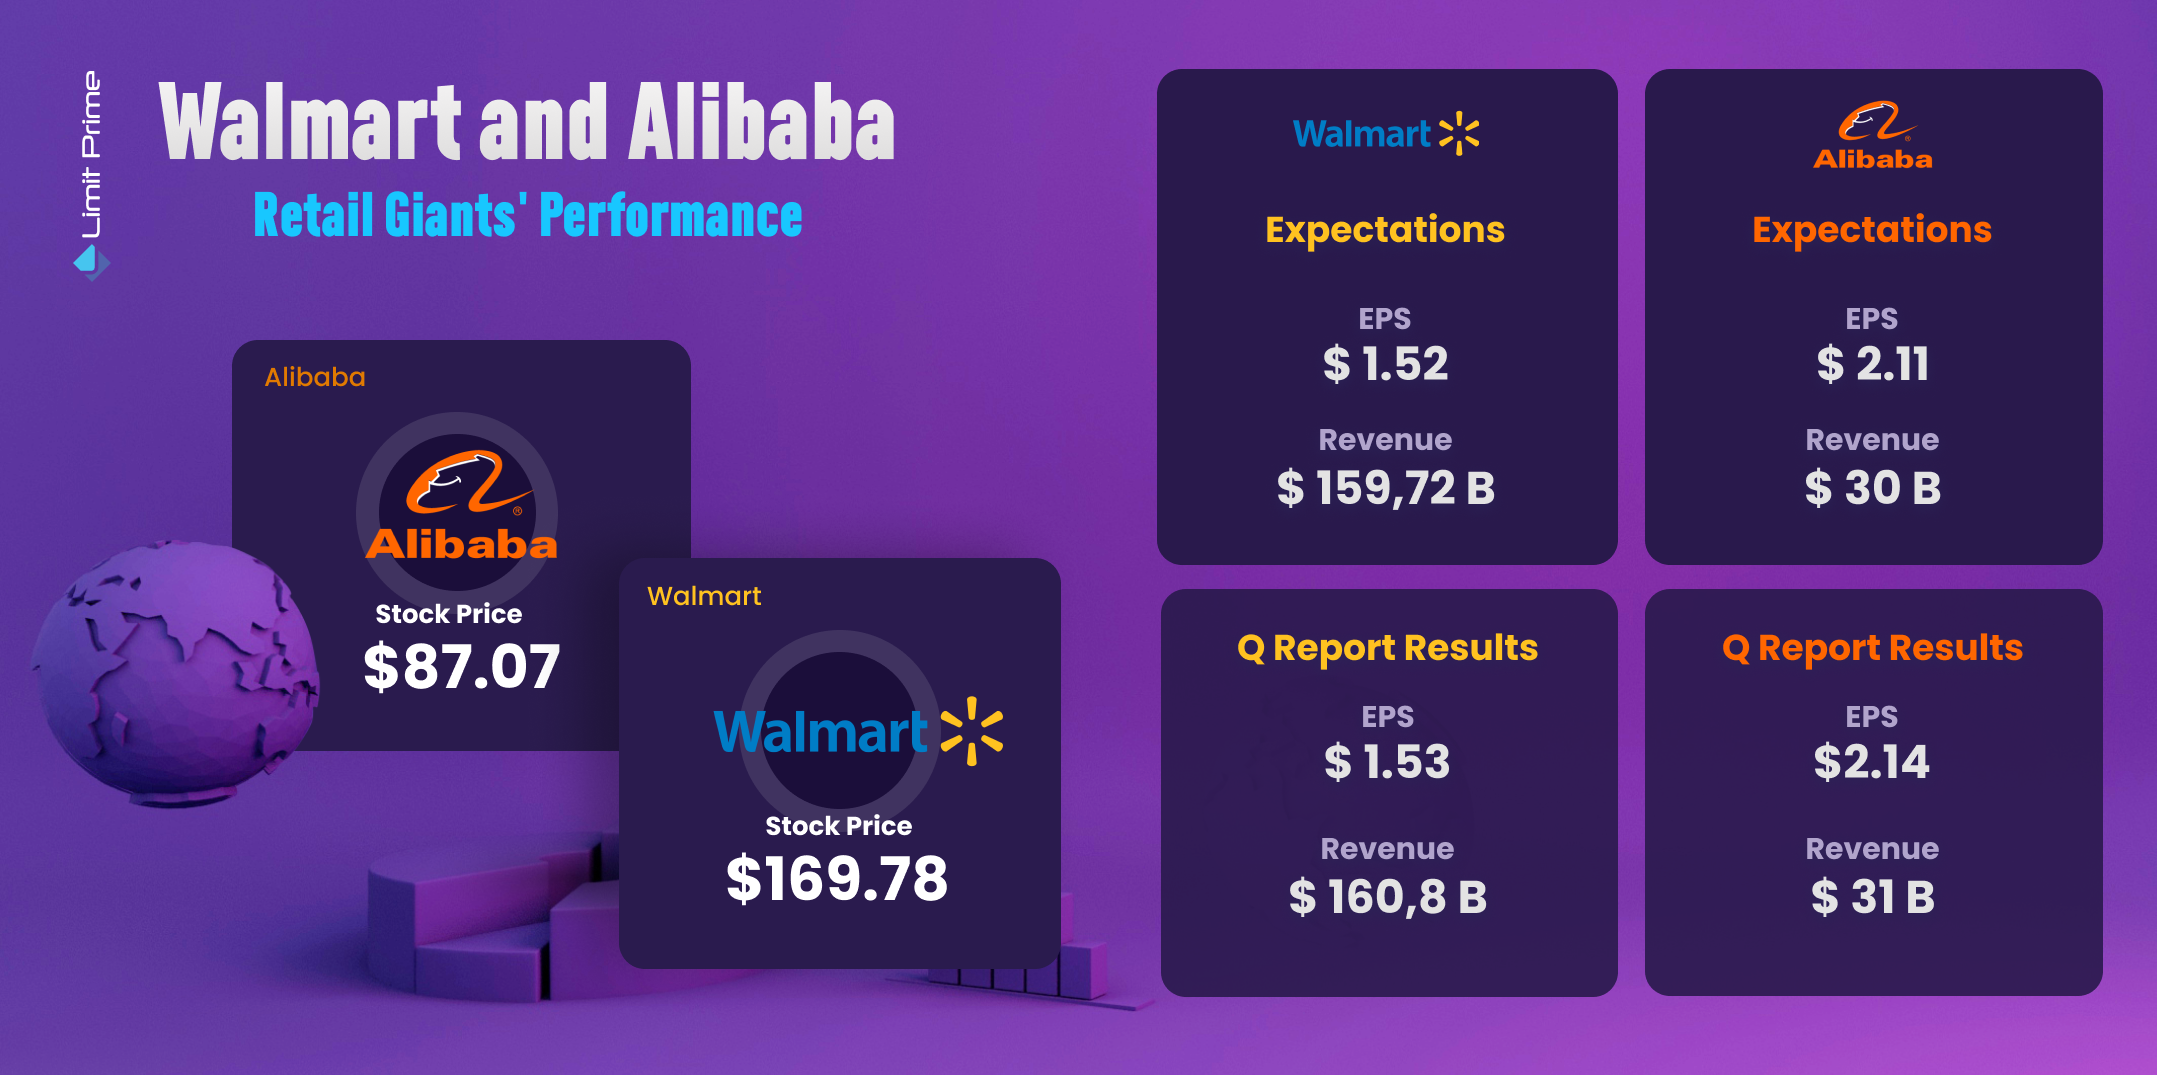 Walmart and Alibaba – Retail Giants' Performance